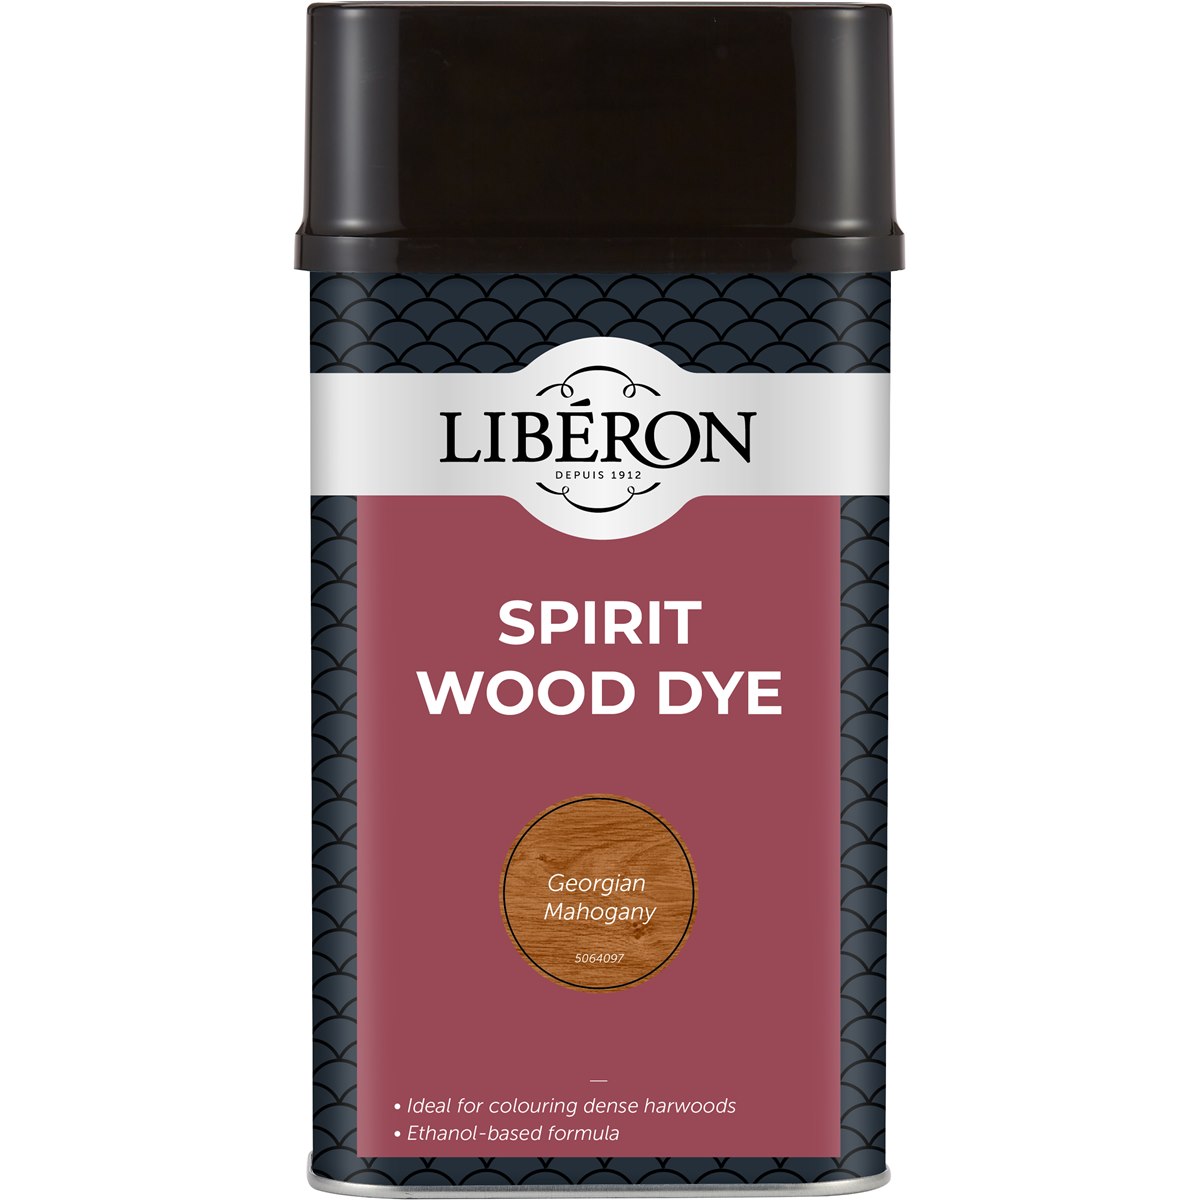 Liberon Spirit Wood Dye Georgian Mahogany 1 Litre